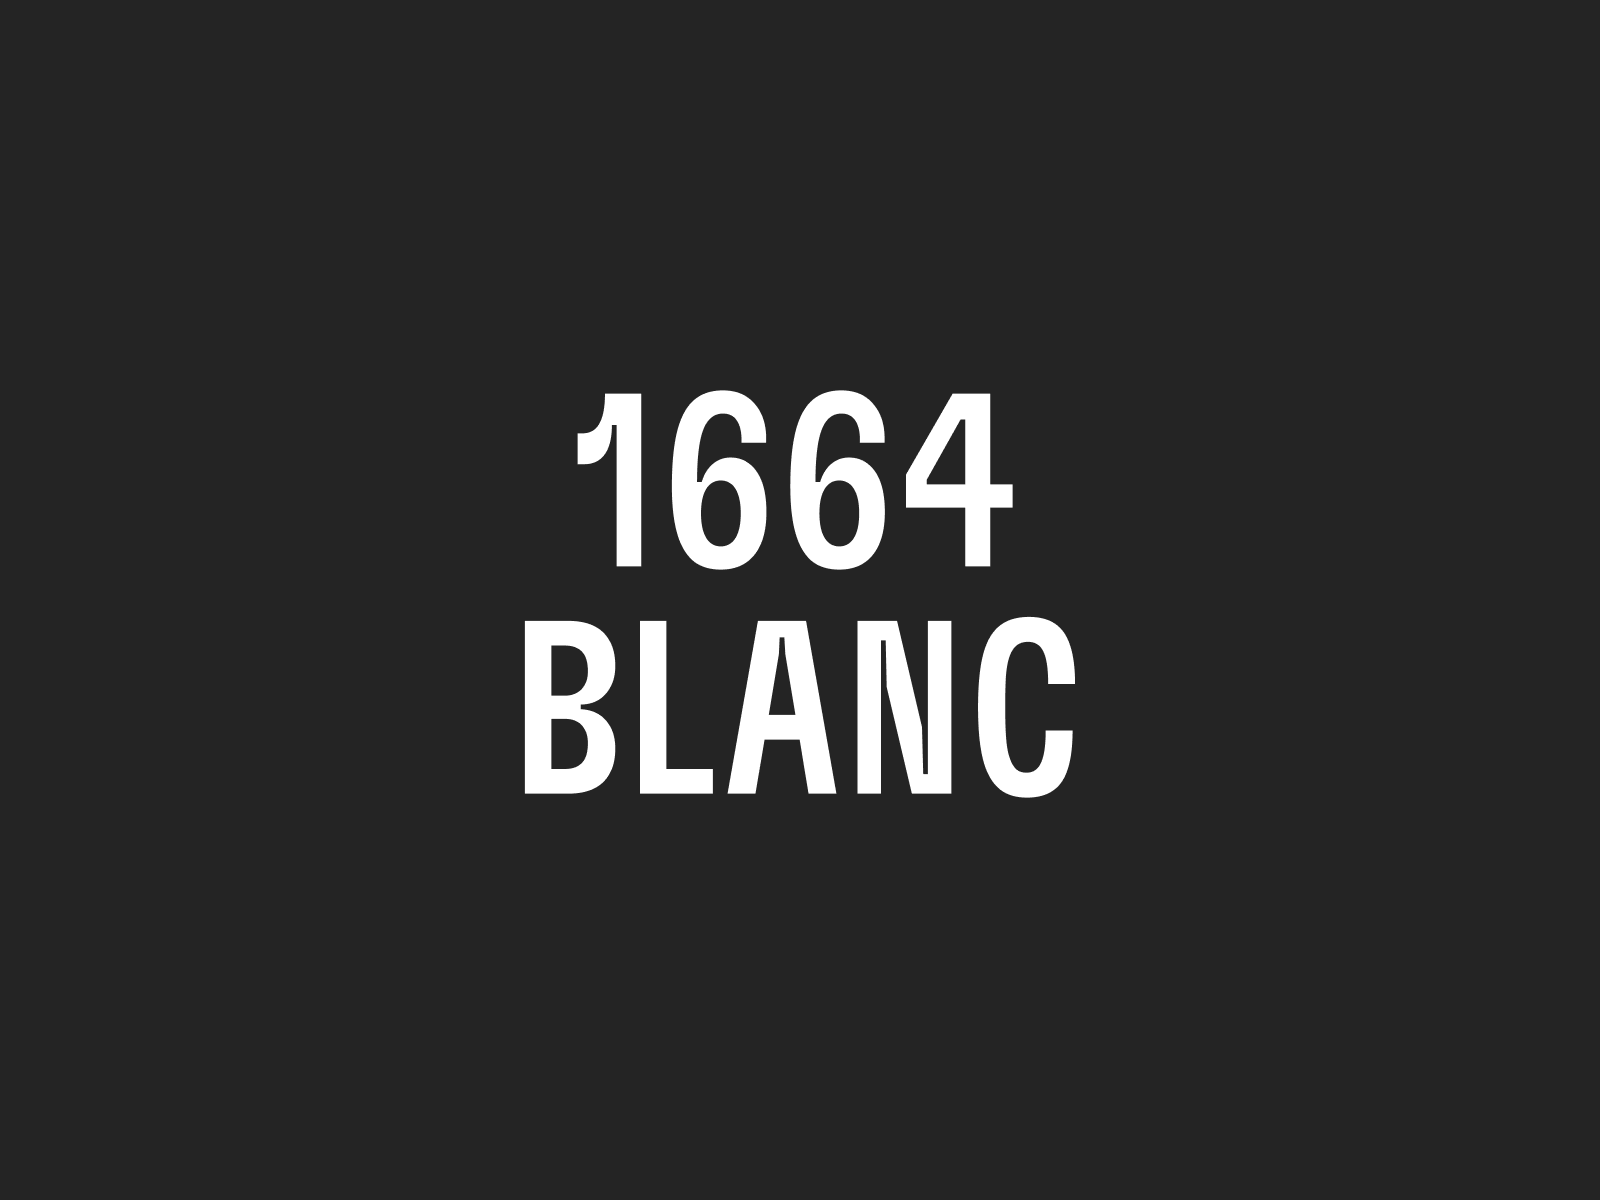 SCENA 1664 BLANC